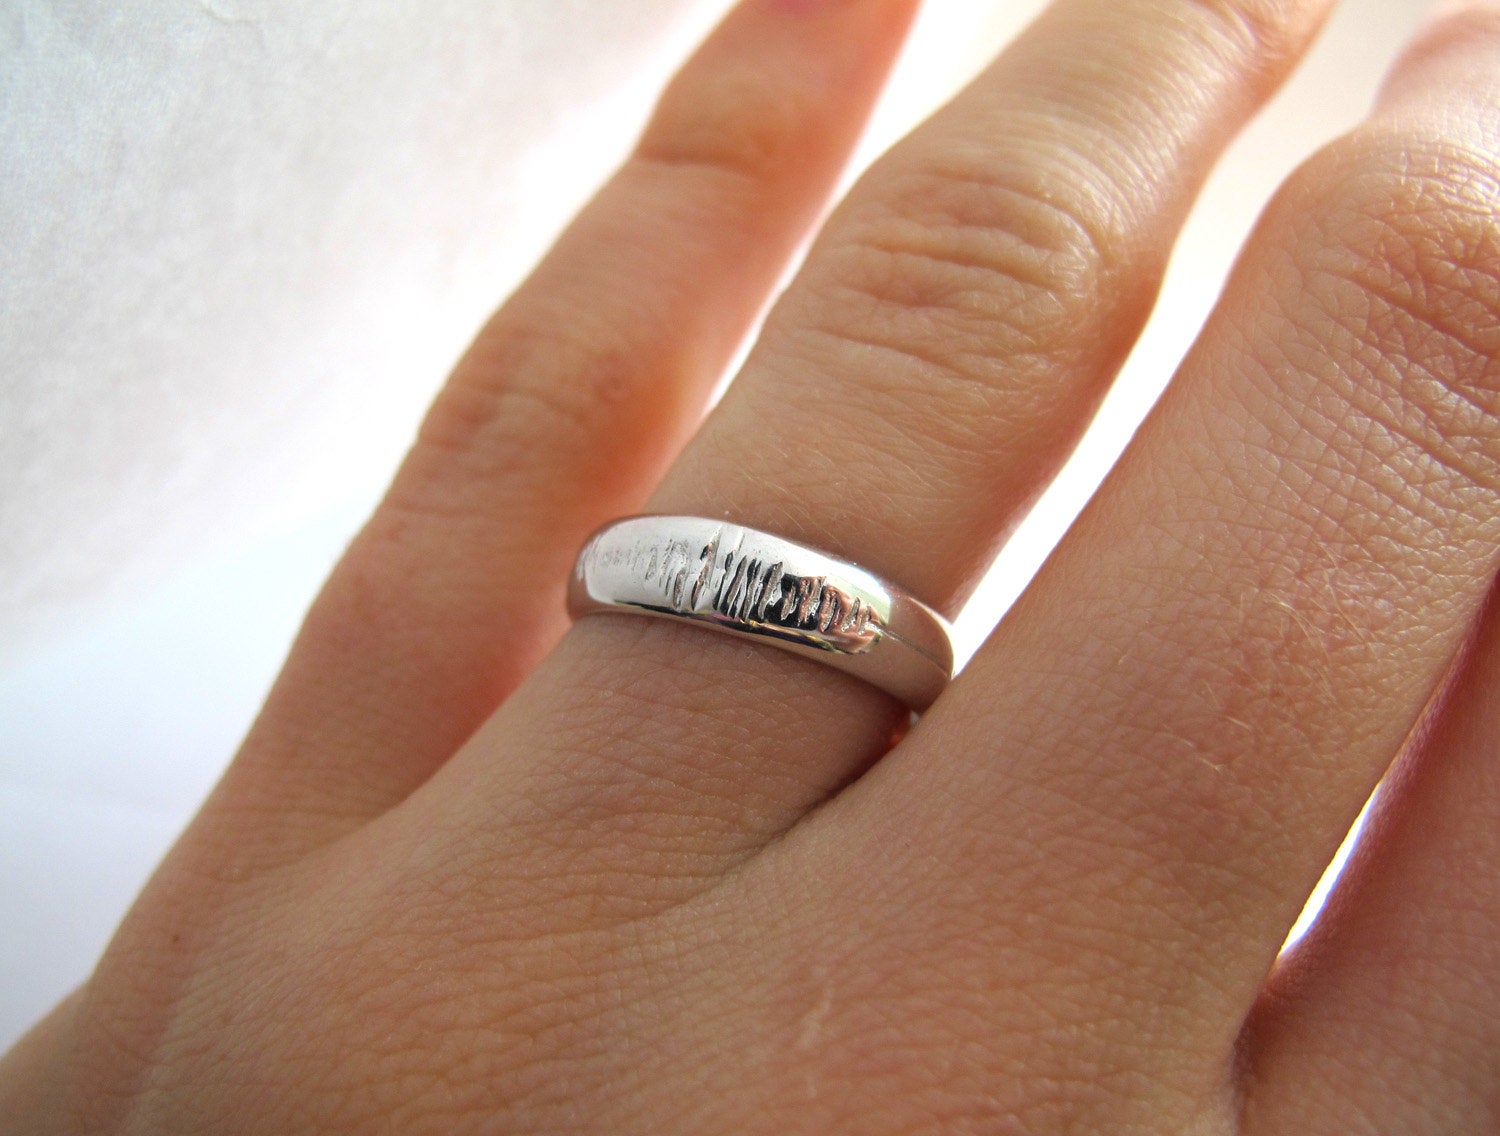 Elvish Engraved Wedding Ring Inspired By Lord of the Rings | Casamento  geek, Casamentos temáticos, Casamento nerd